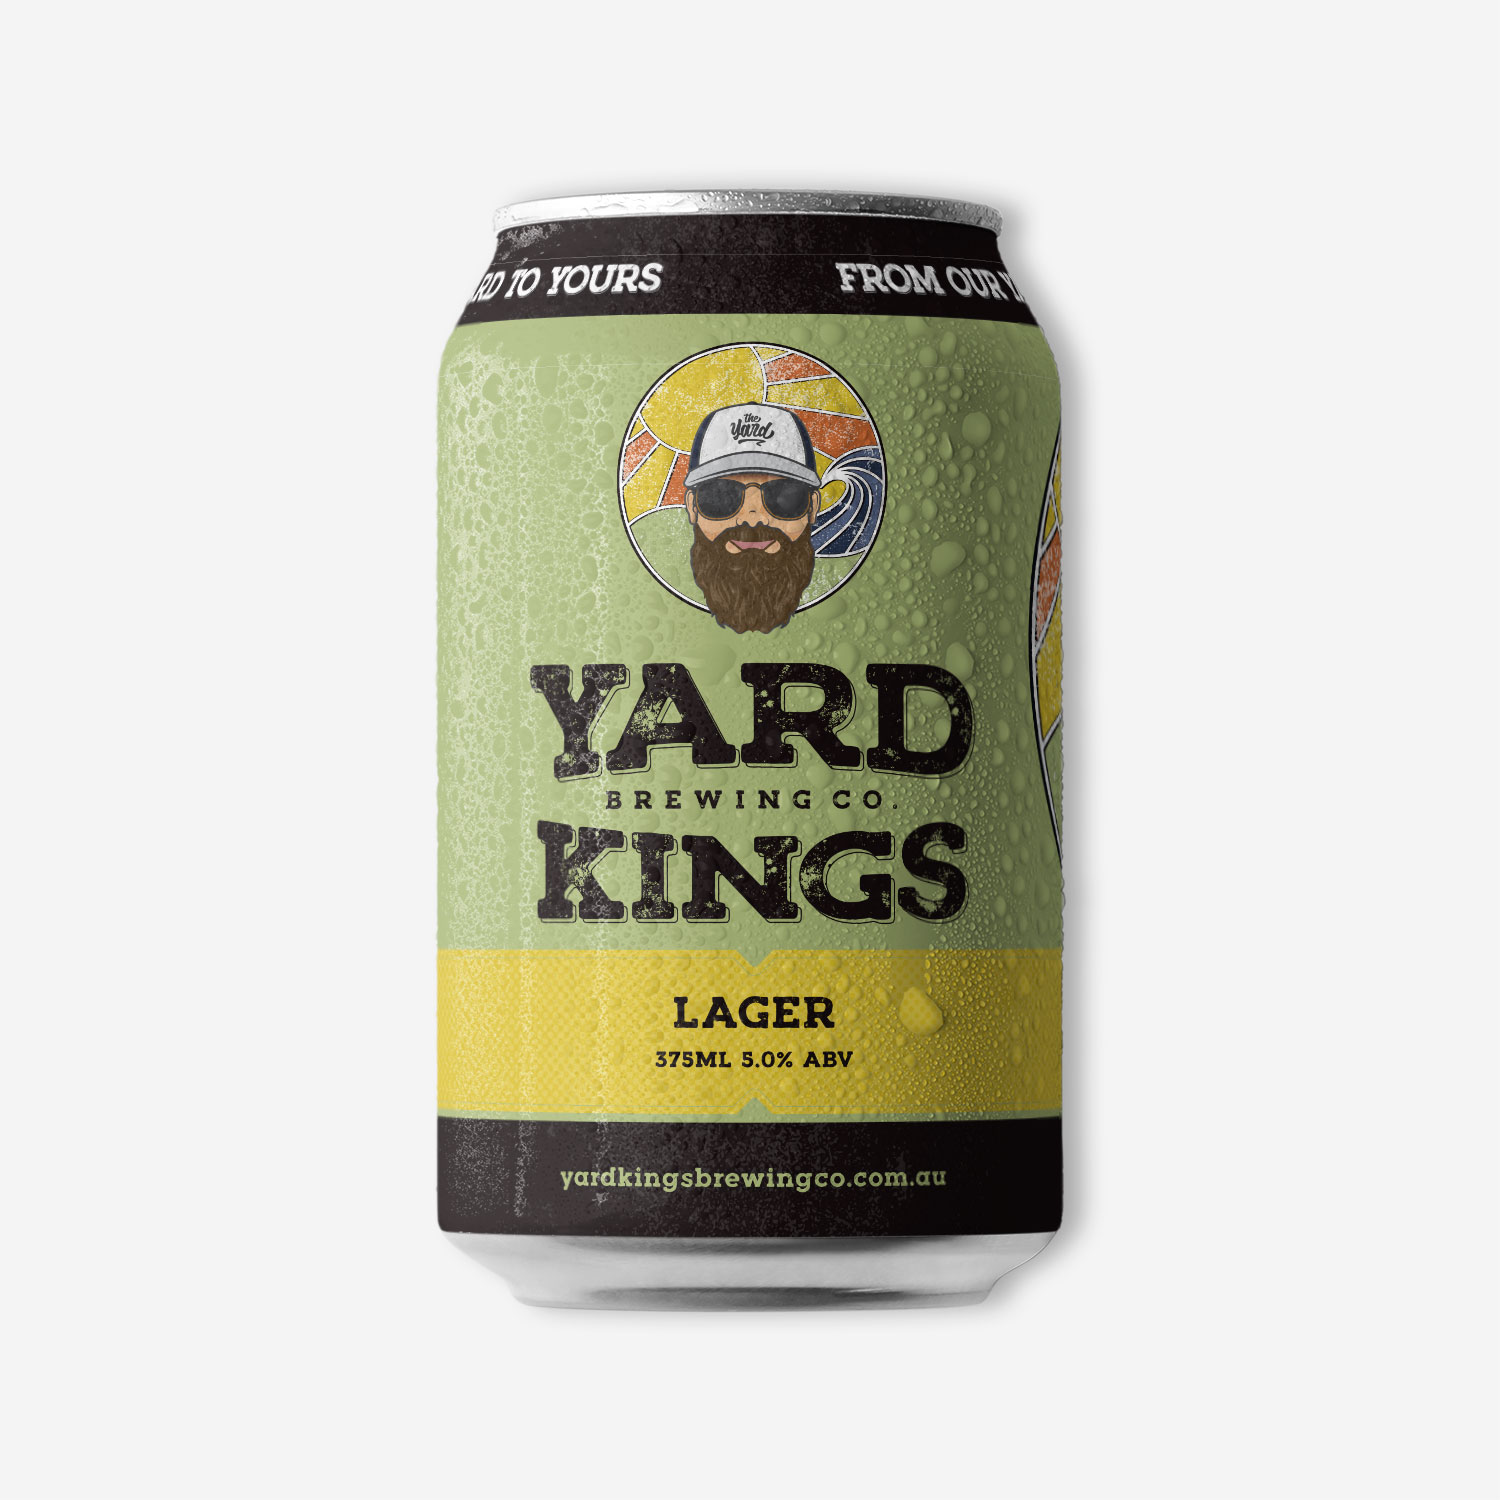 Yard Kings Brewing Co.